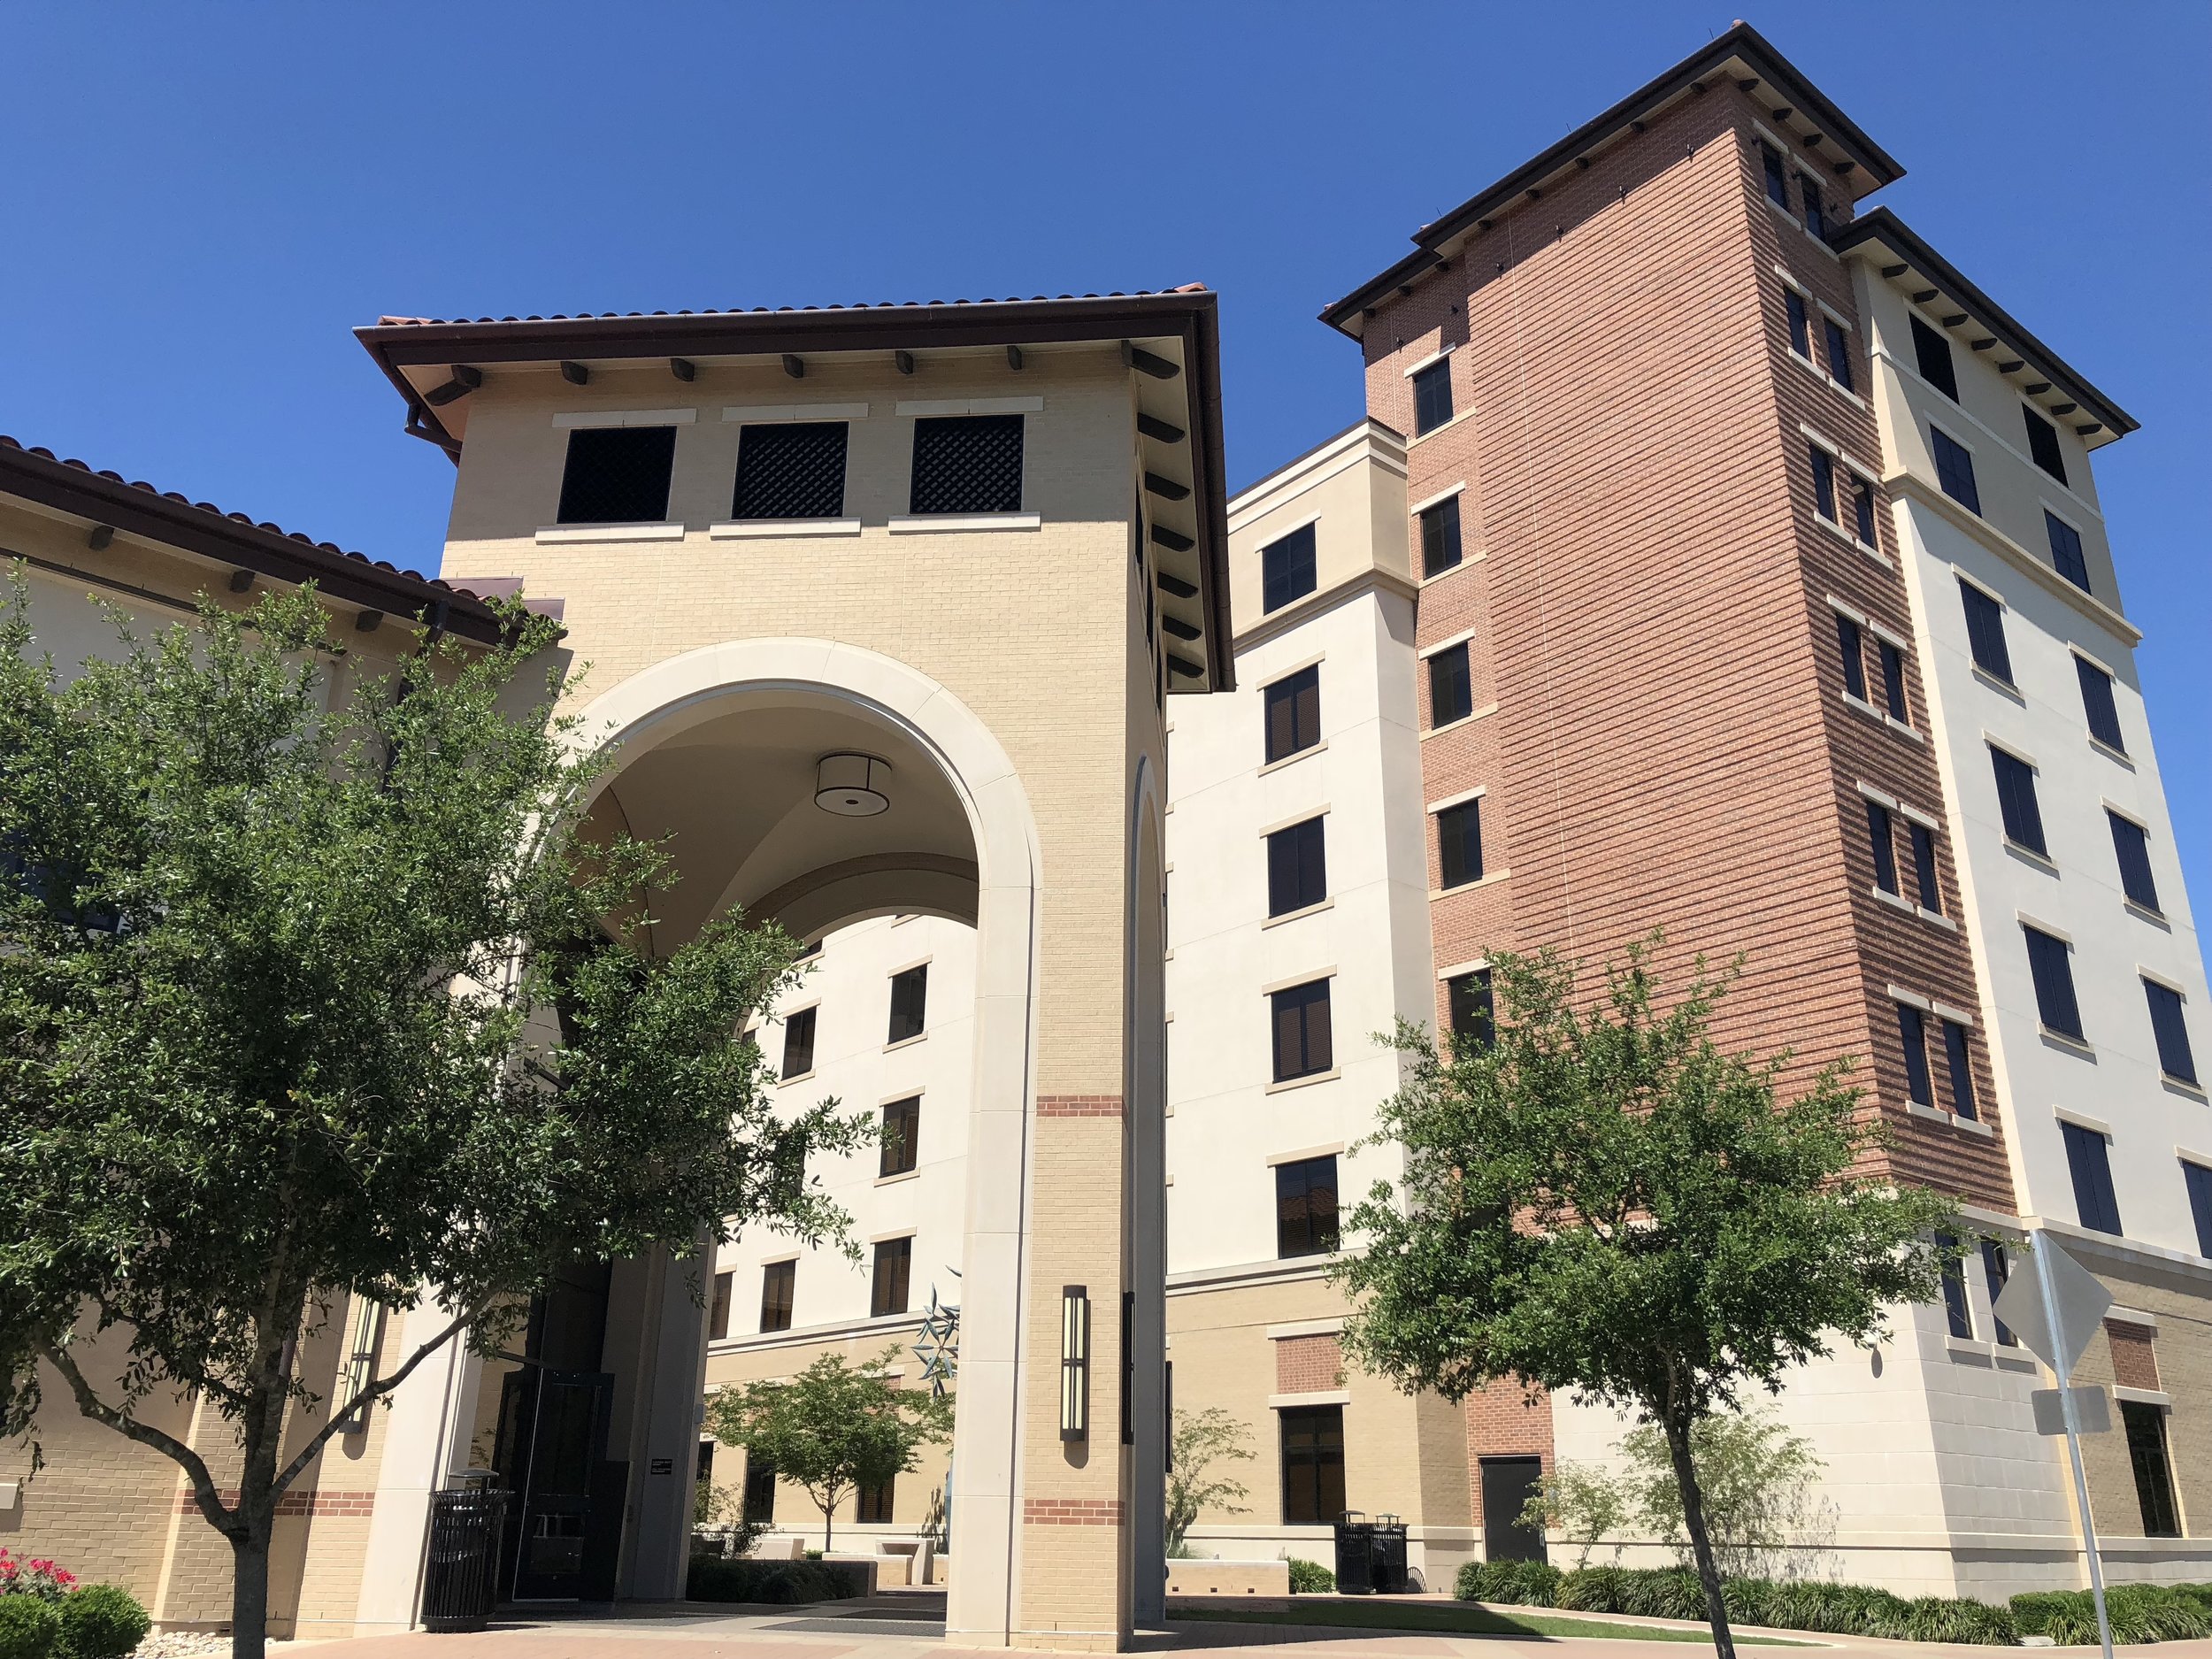 Texas State University: Moore Street Housing